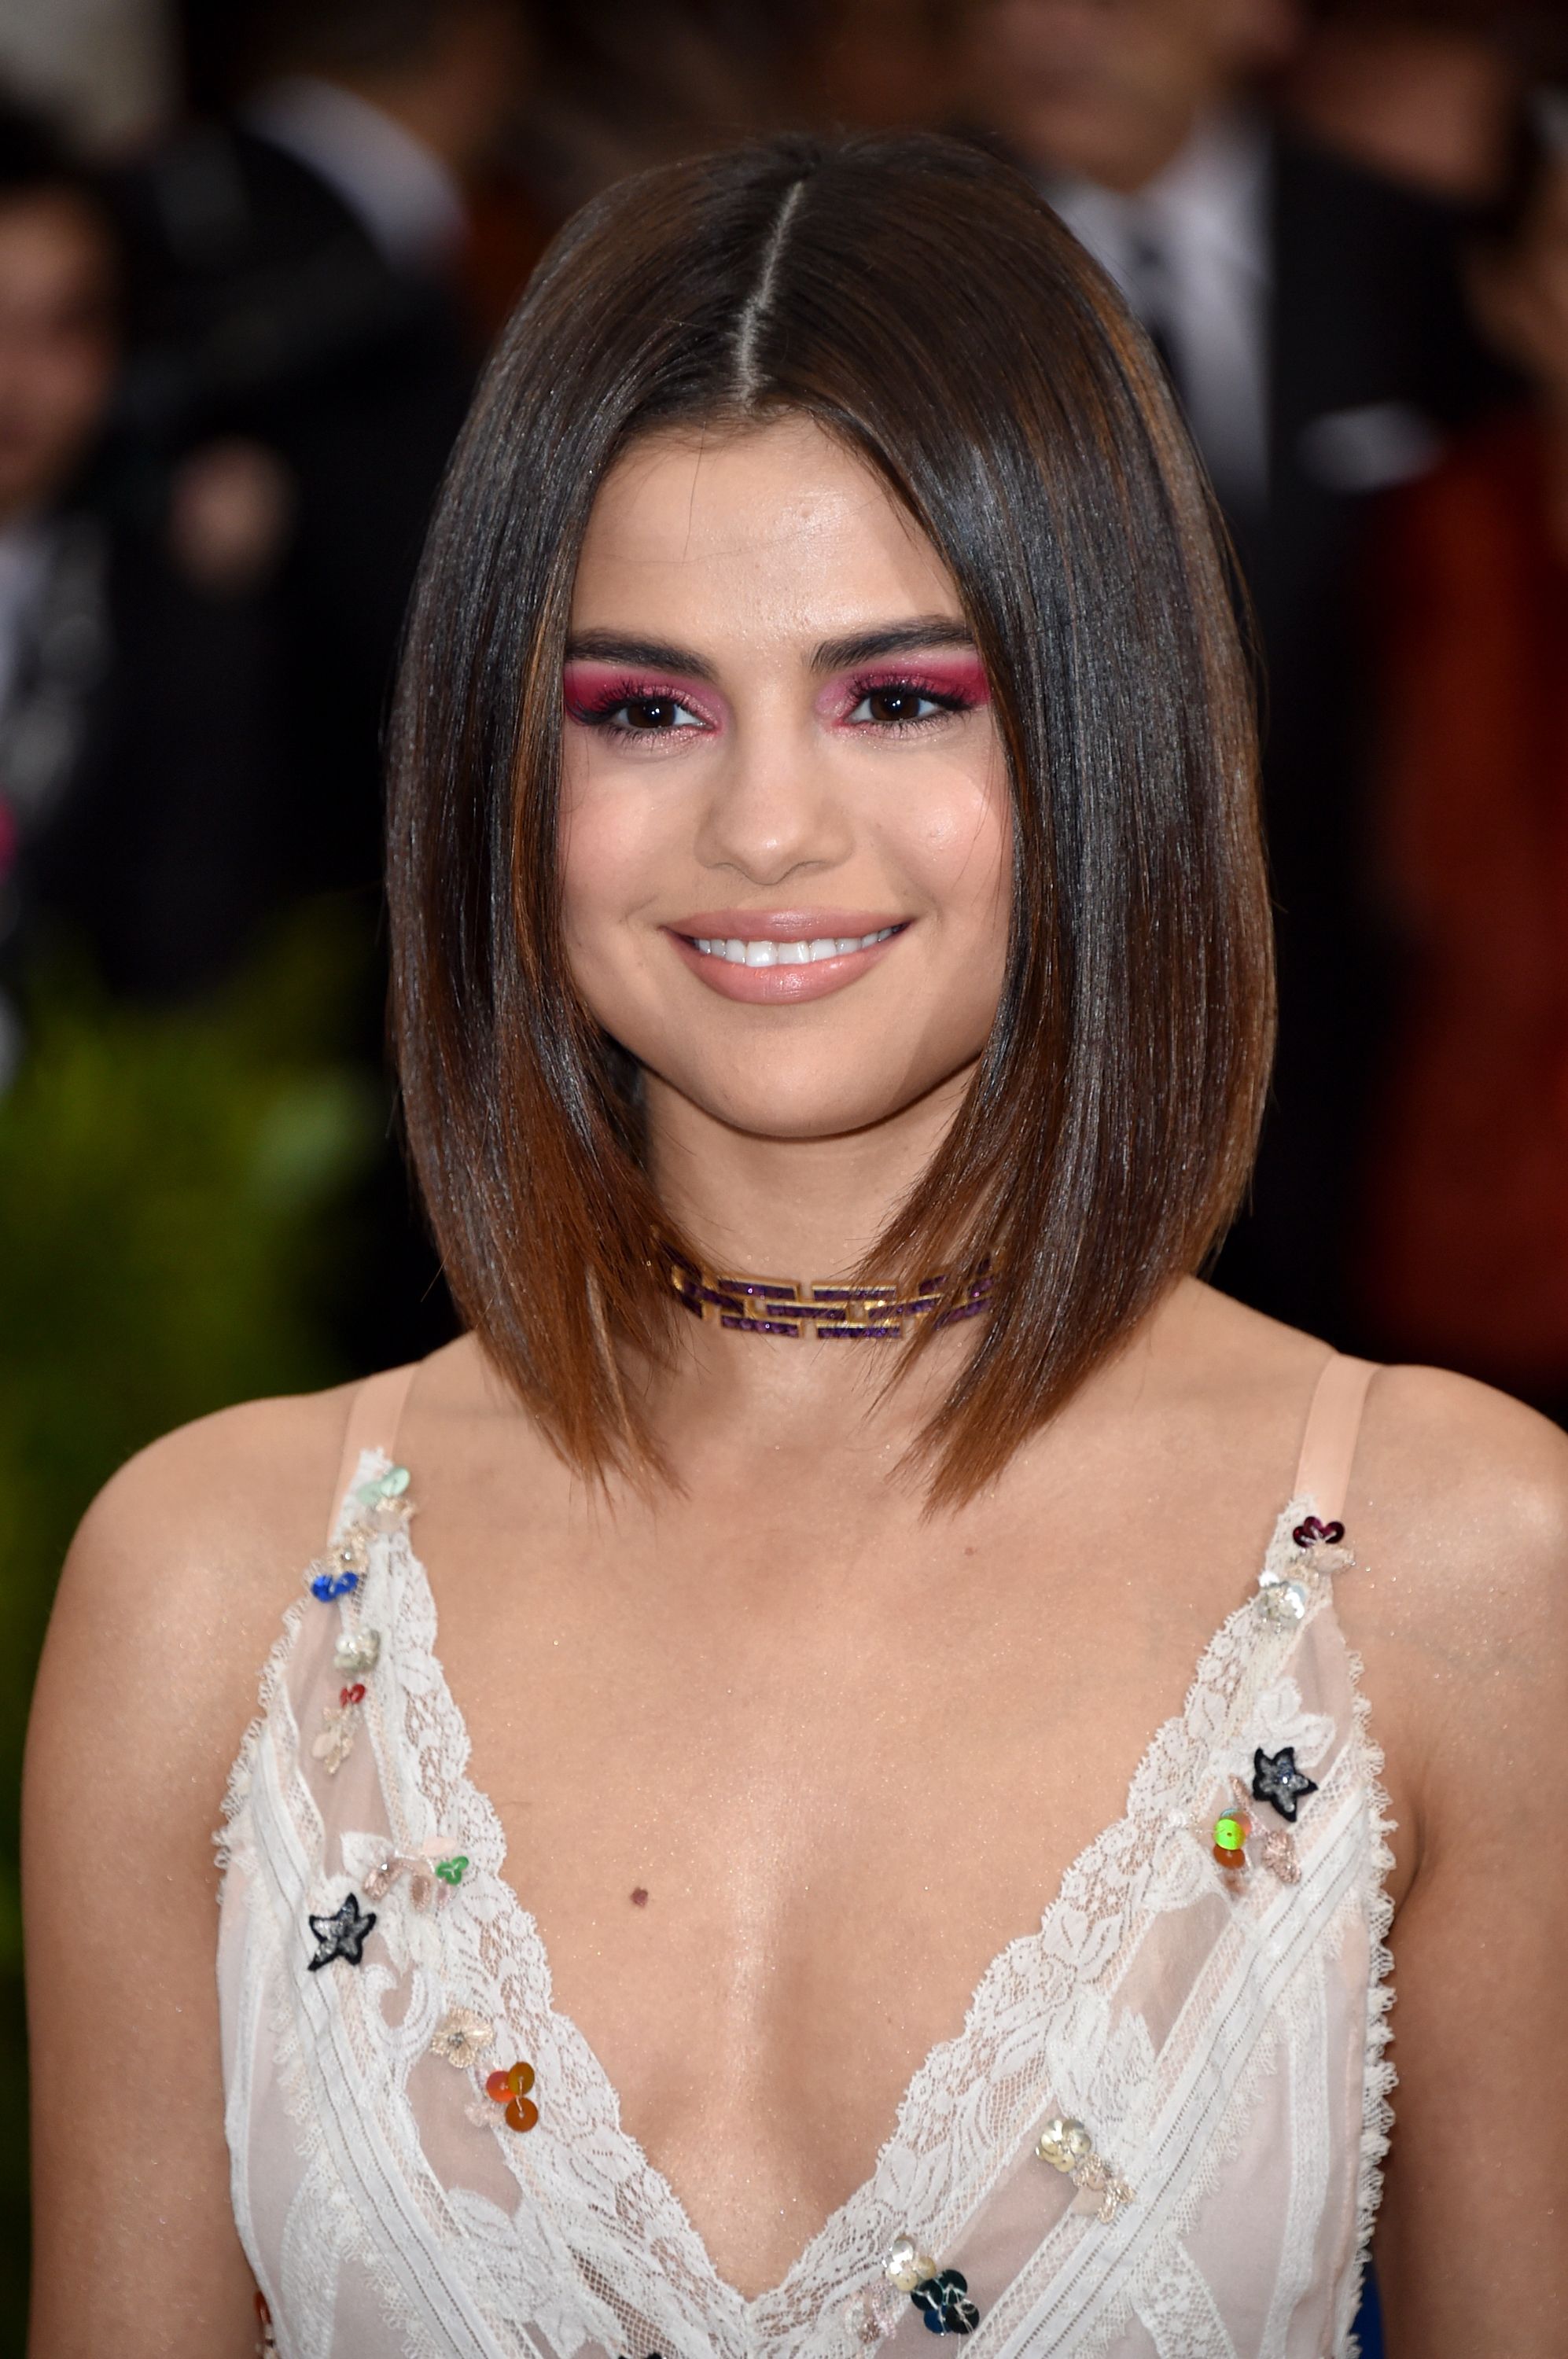 Selena Hairstyles